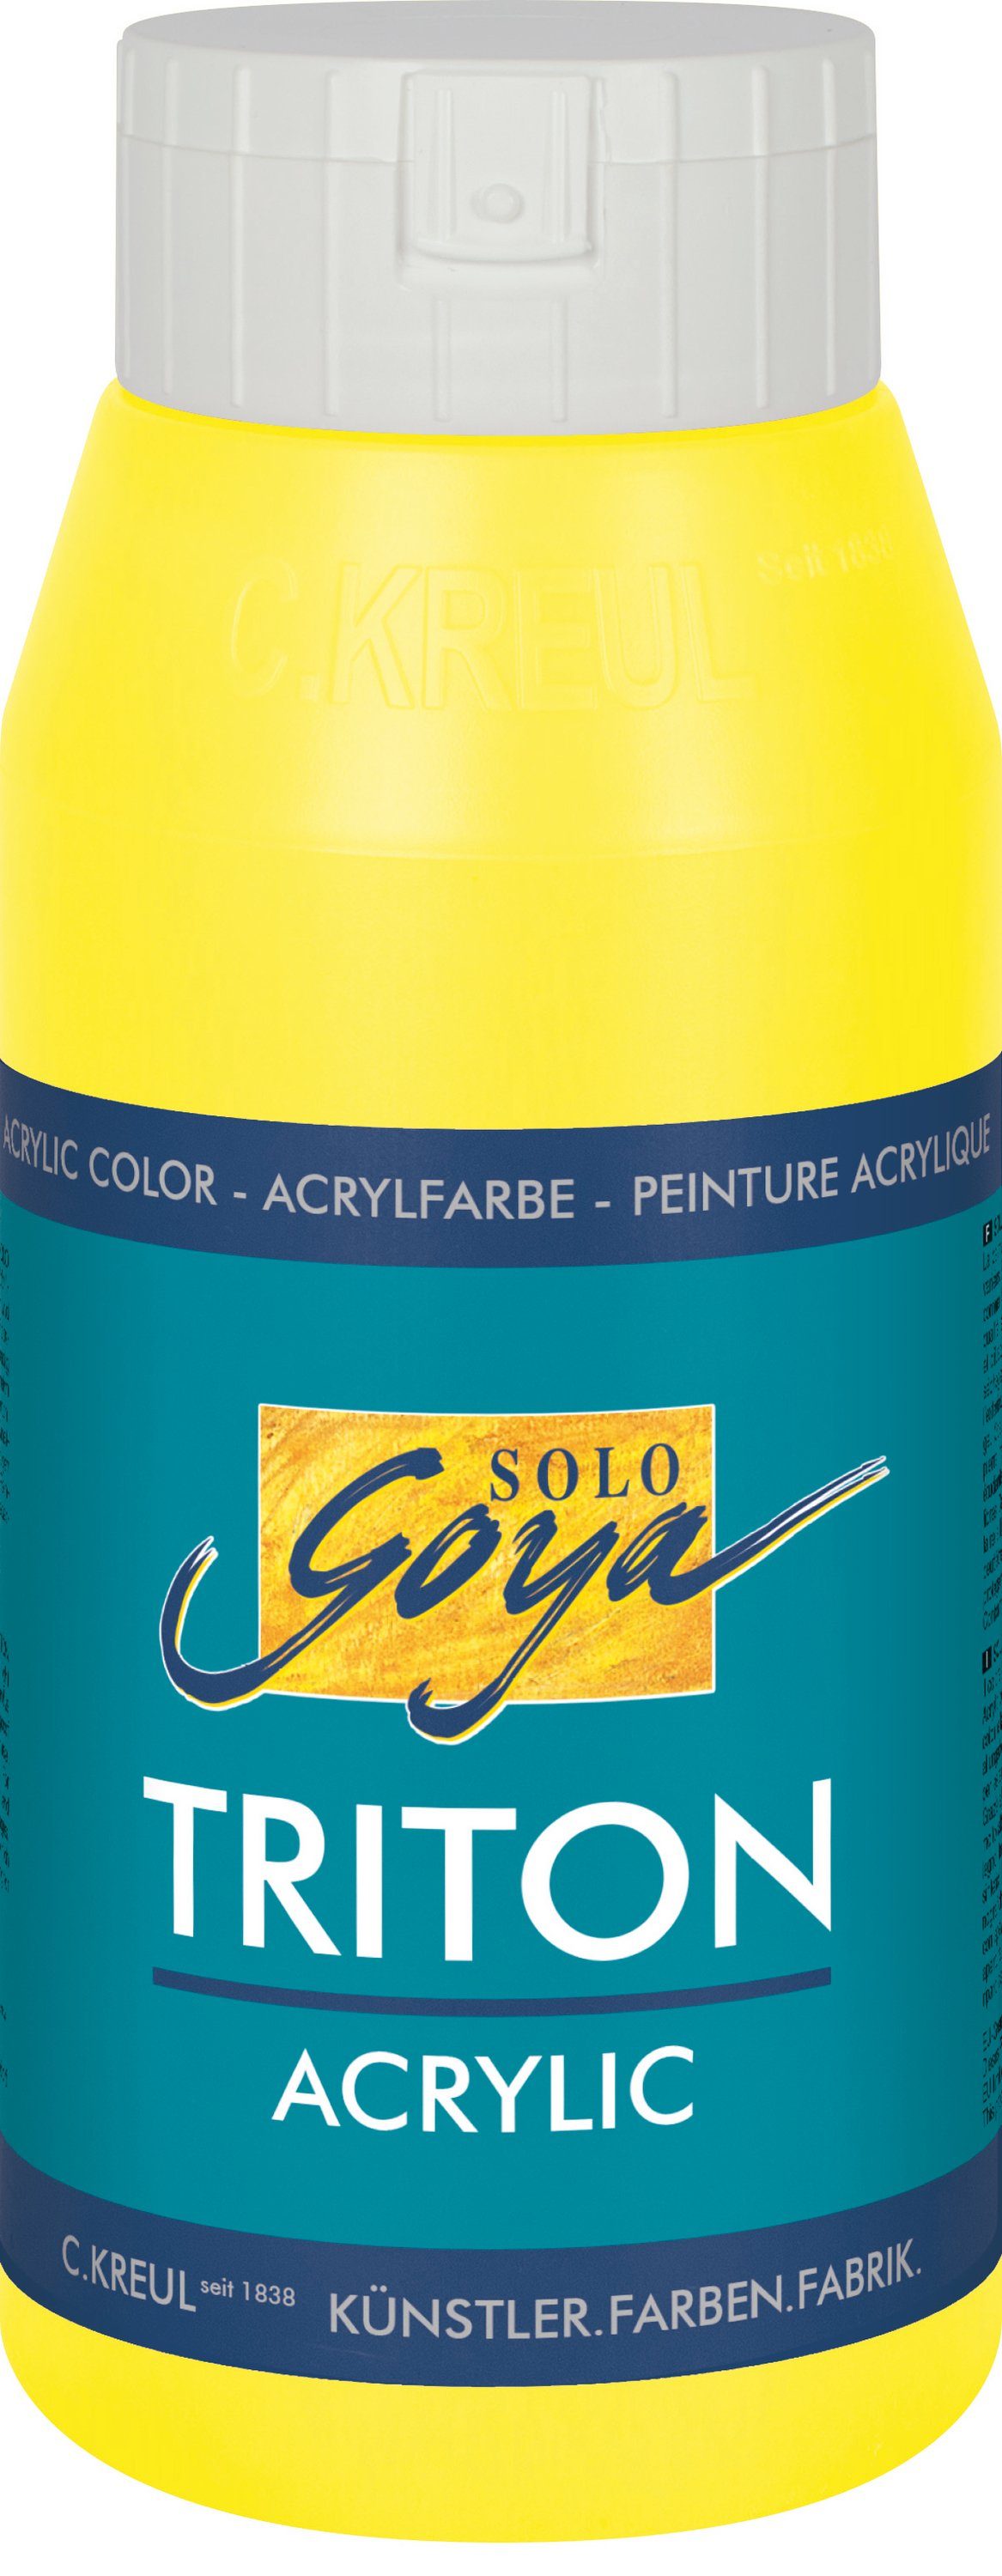 Goya Kreul Triton Acrylic, ml 750 Zitrone Acrylfarbe Solo